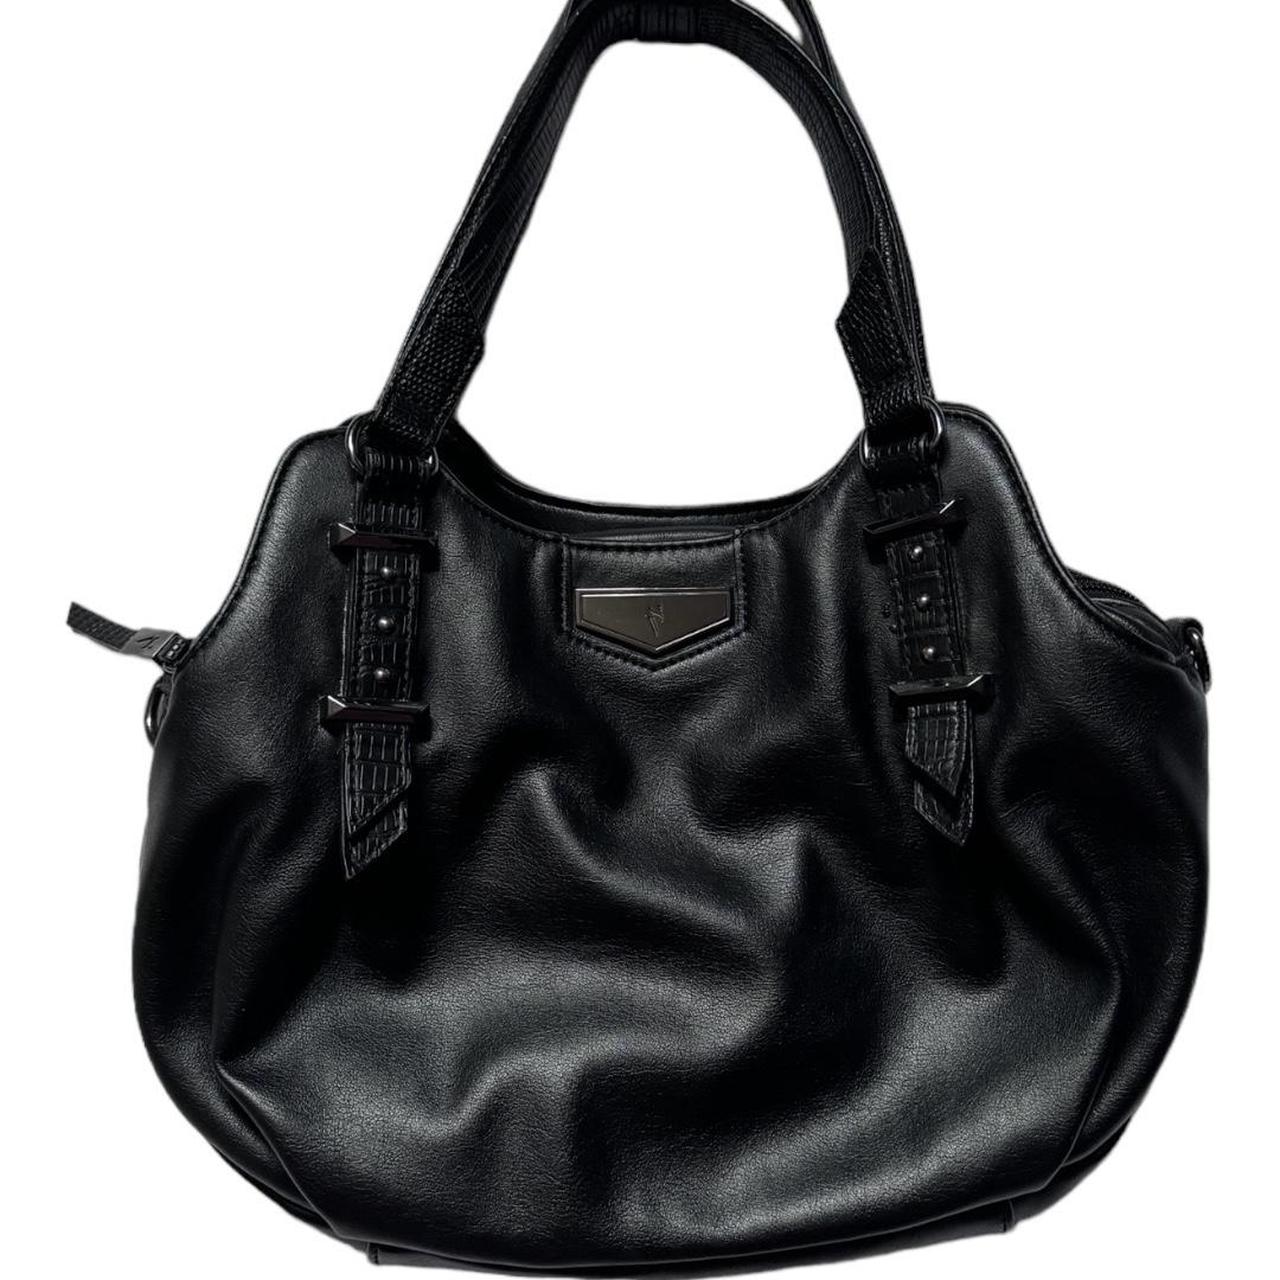 Womens Handbags & Purses, Accessories | Kohl's | Women handbags, Purses and  handbags, Stylish handbags